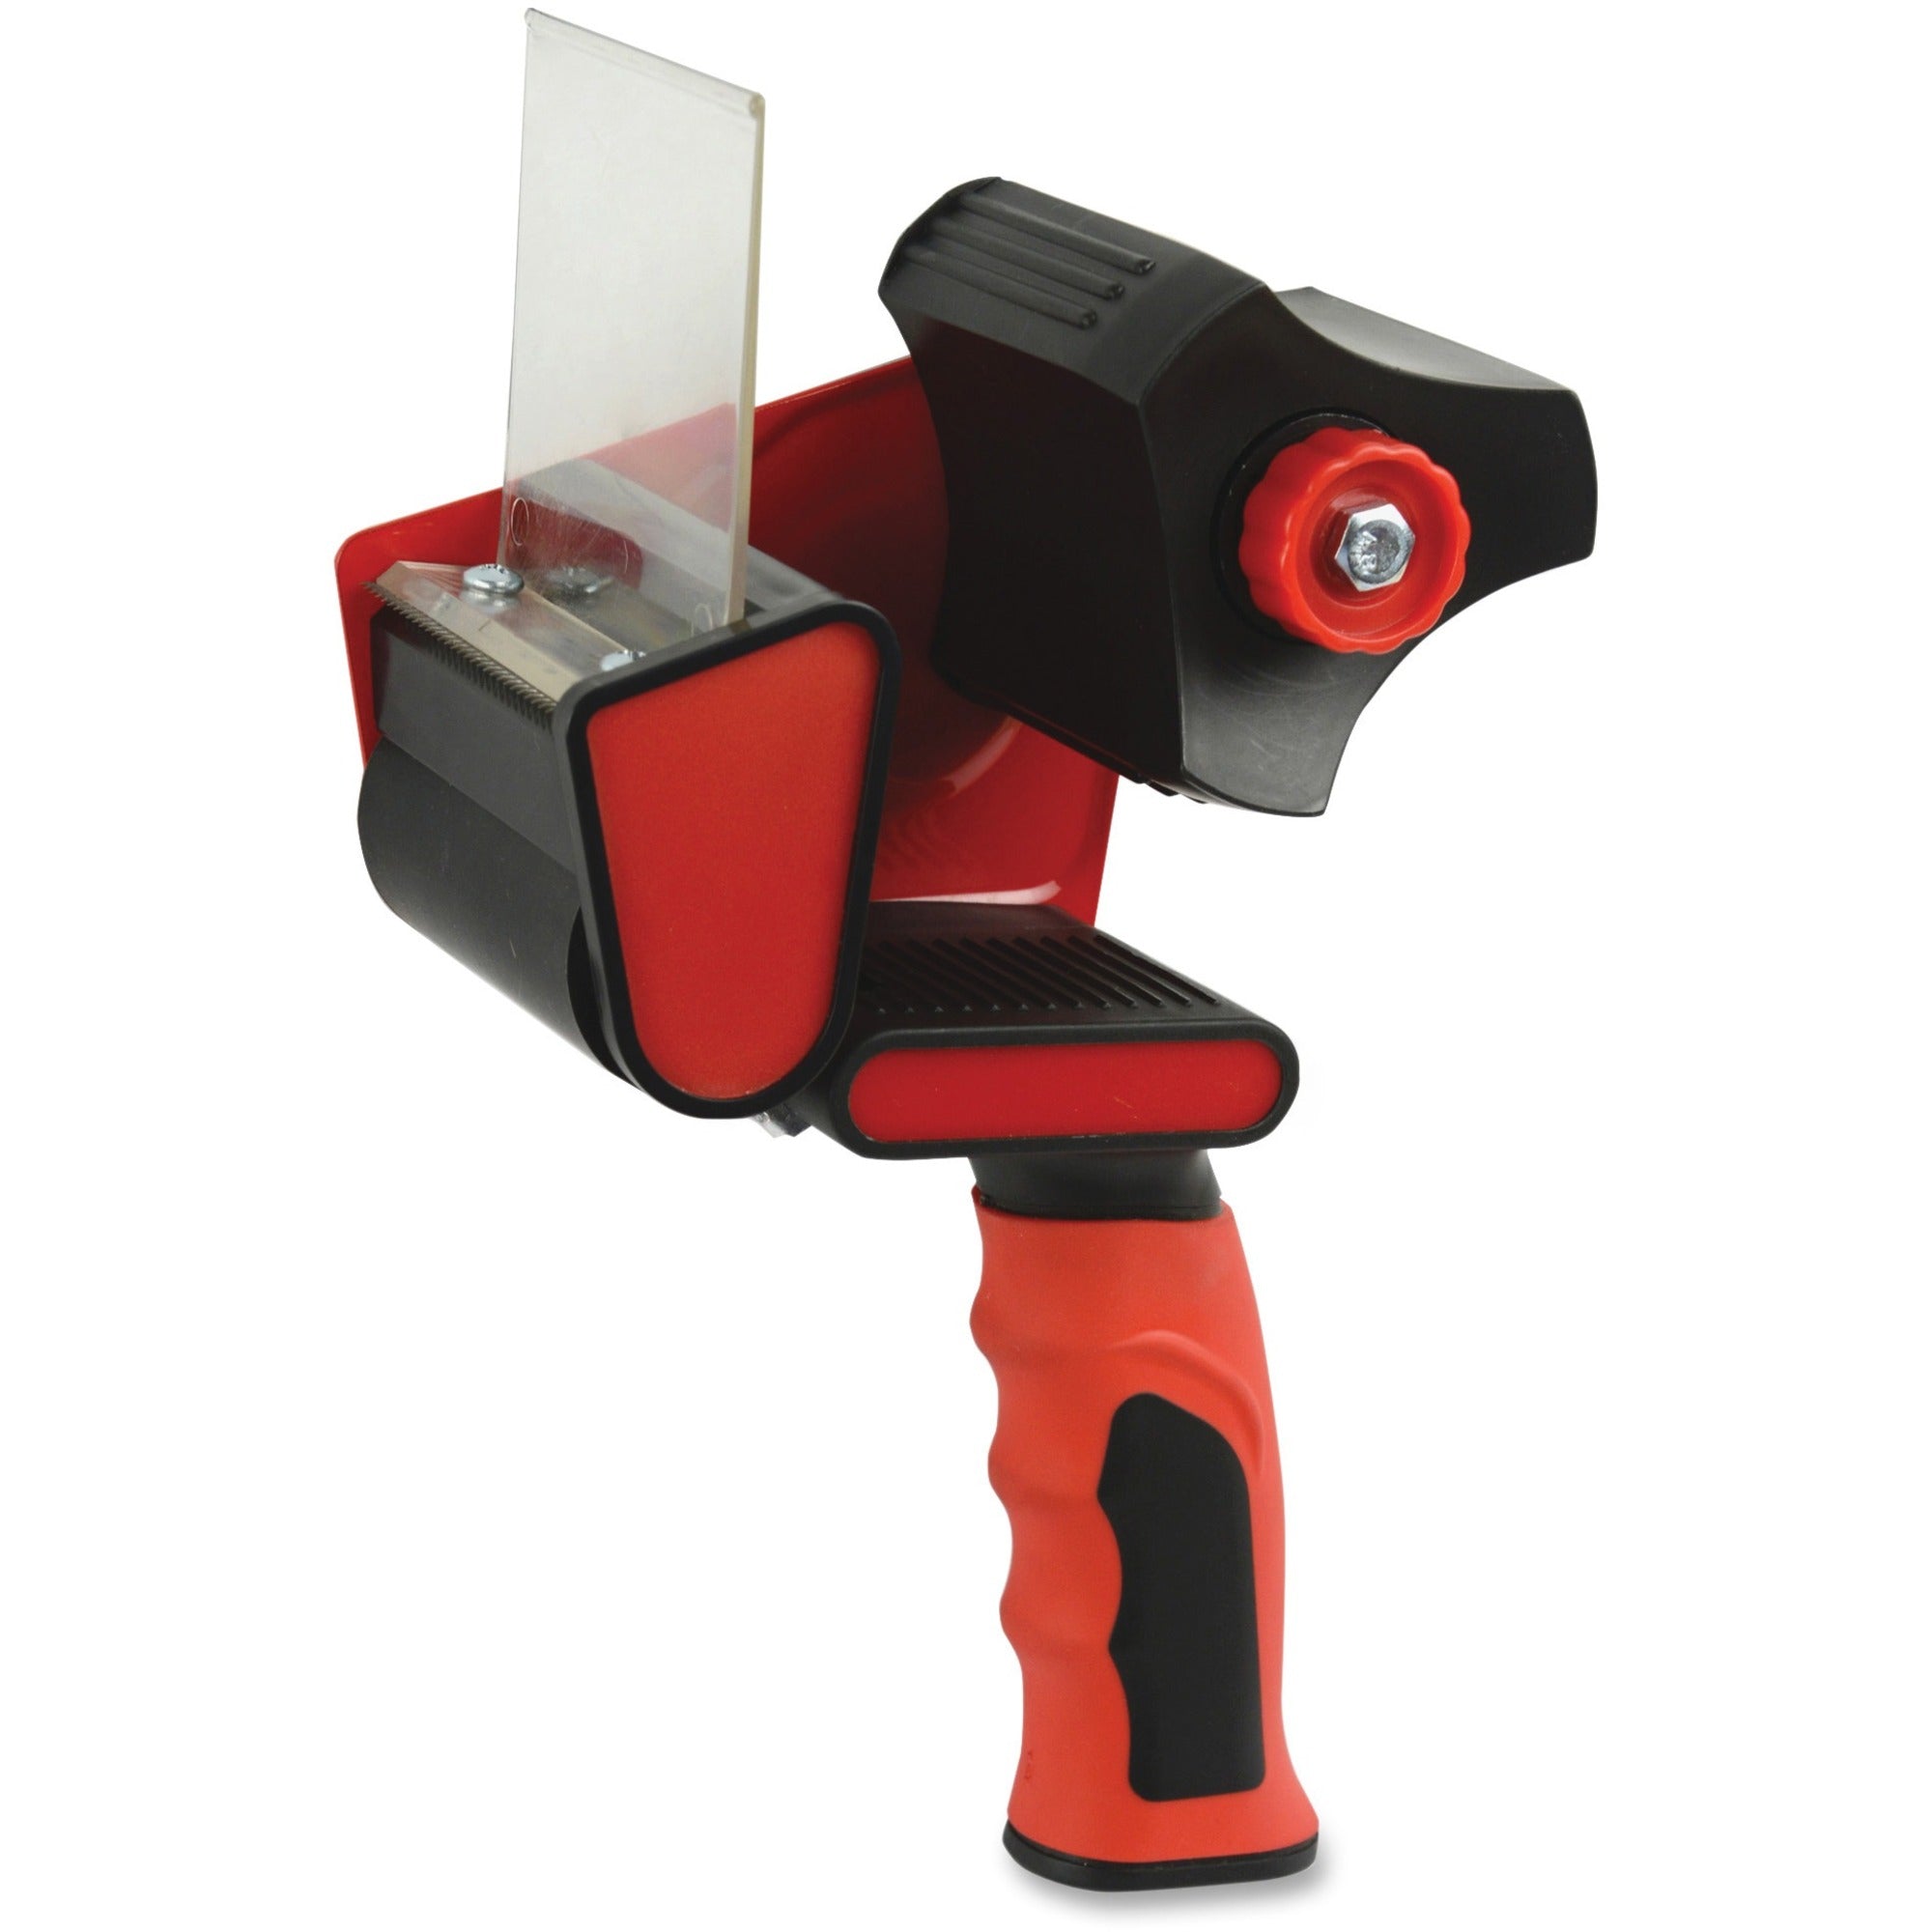 Sparco Handheld Tape Dispenser - 3" Core - Refillable - Ergonomic Design, Adjustable Tension Mechanism, Durable - Red, Black - 1 Each - 